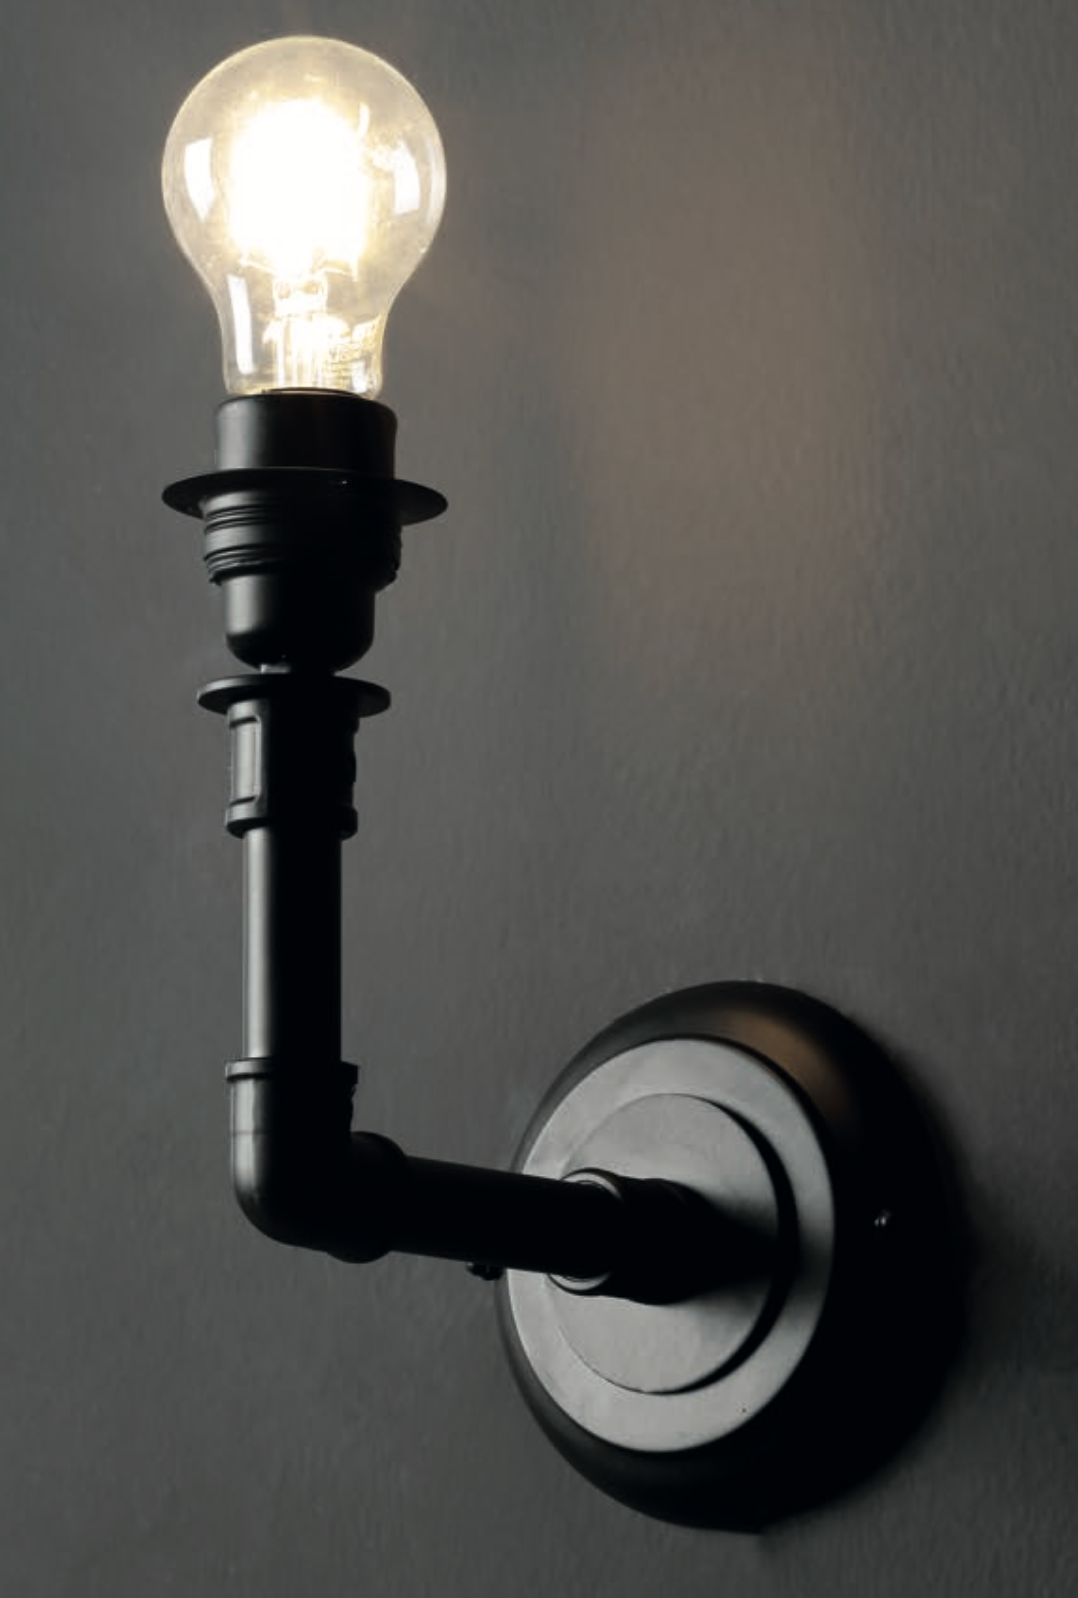 Industrialis bathroom wall light in Industrial style